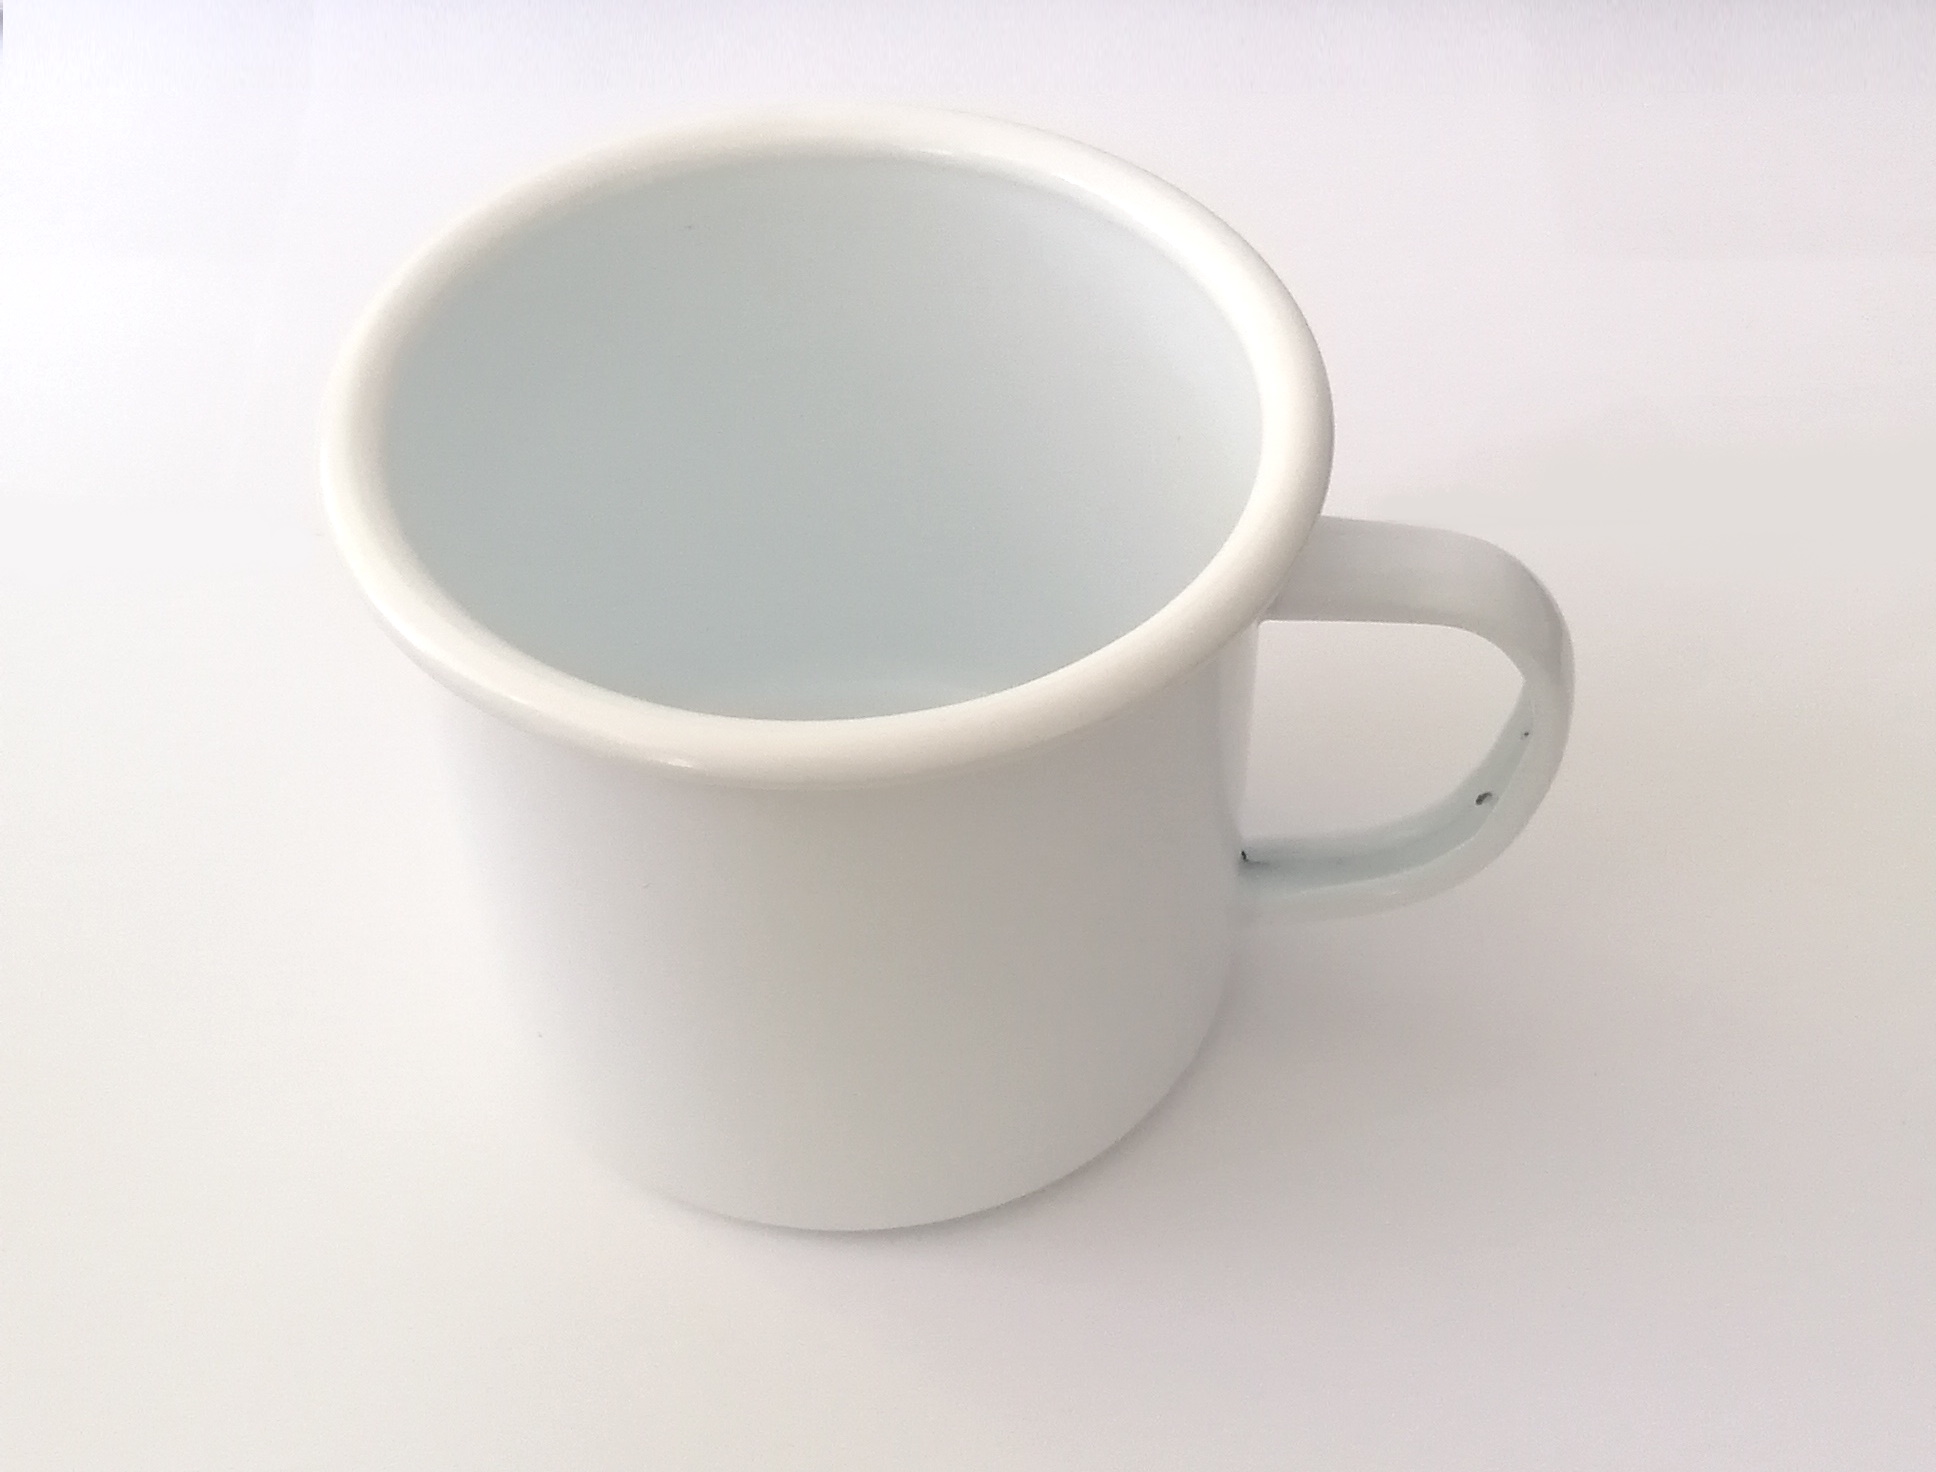 Enamel steel mug for sublimation - white with a white rim